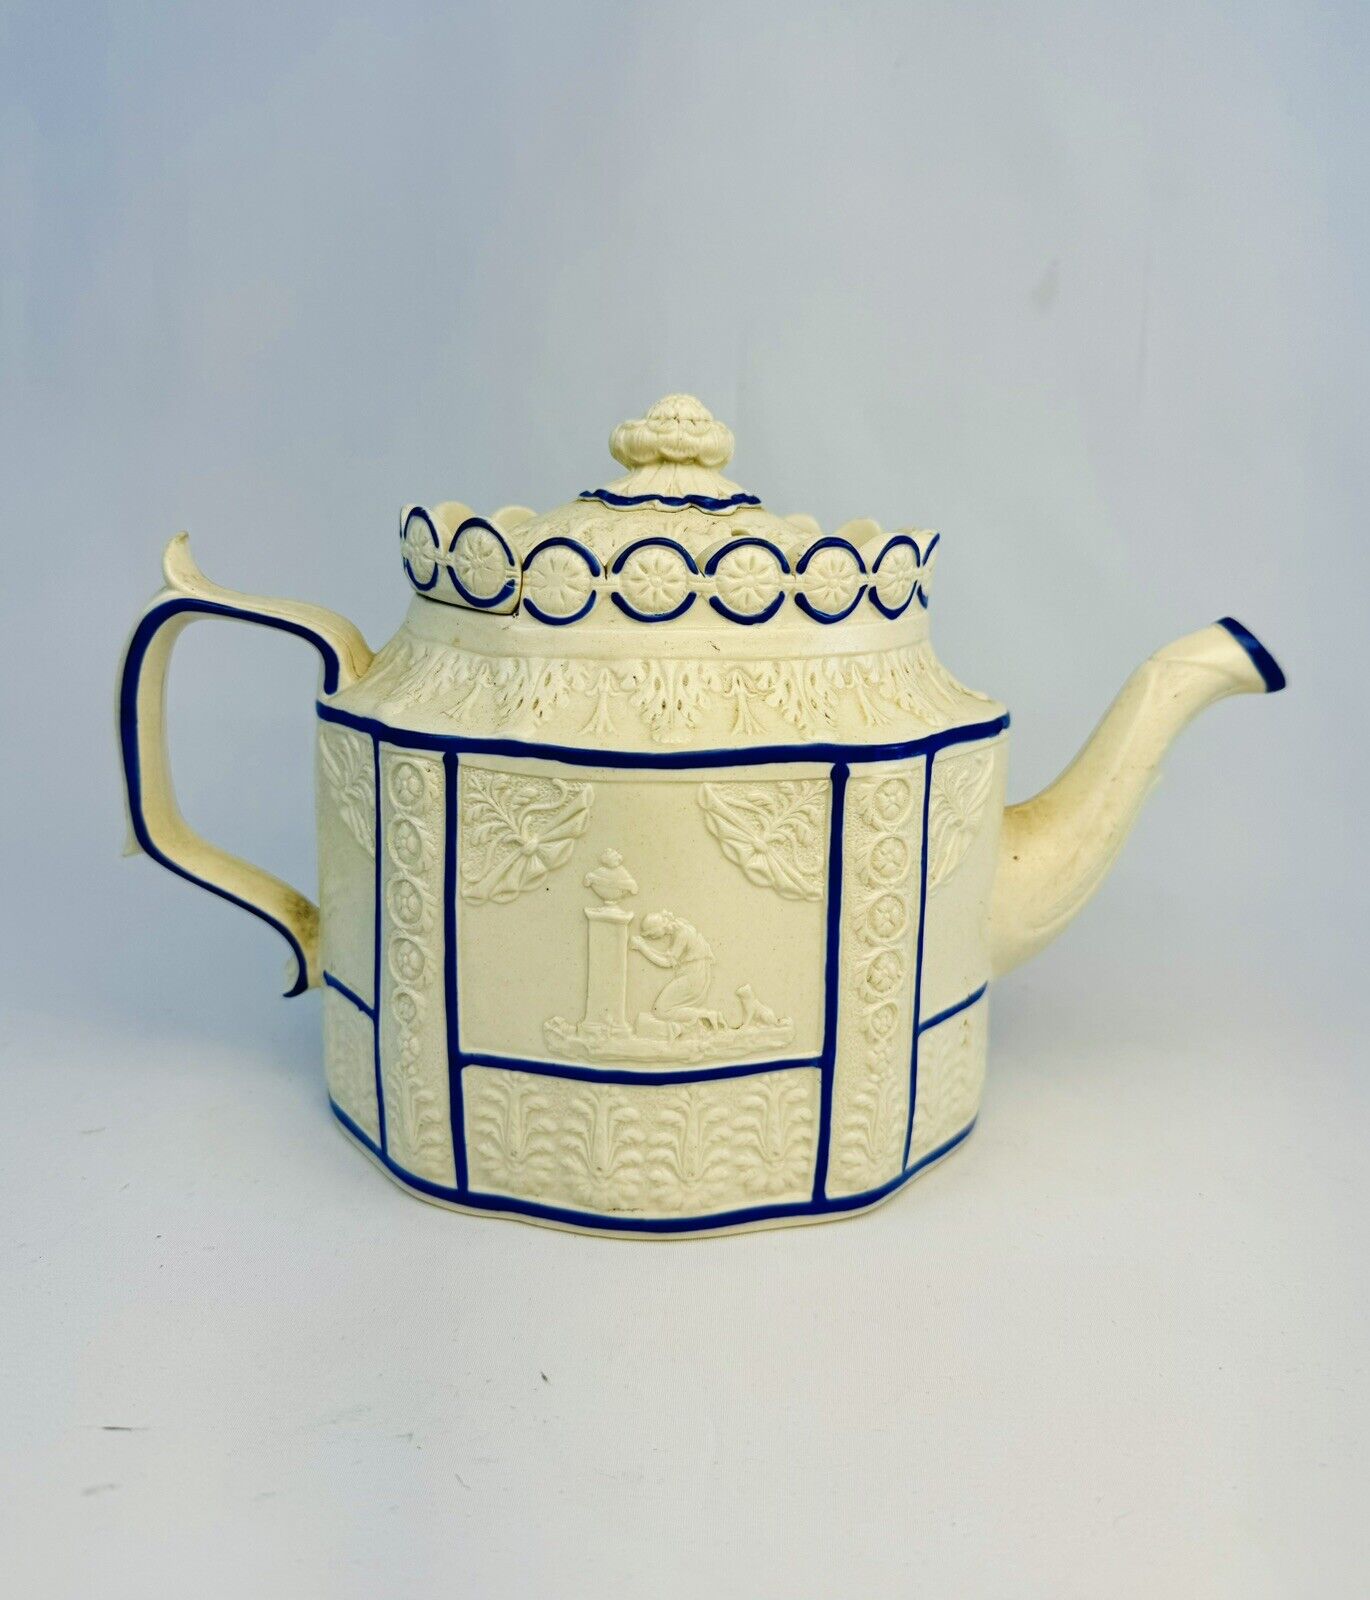 Castleford Neoclassical Teapot c. 1795 - 1810